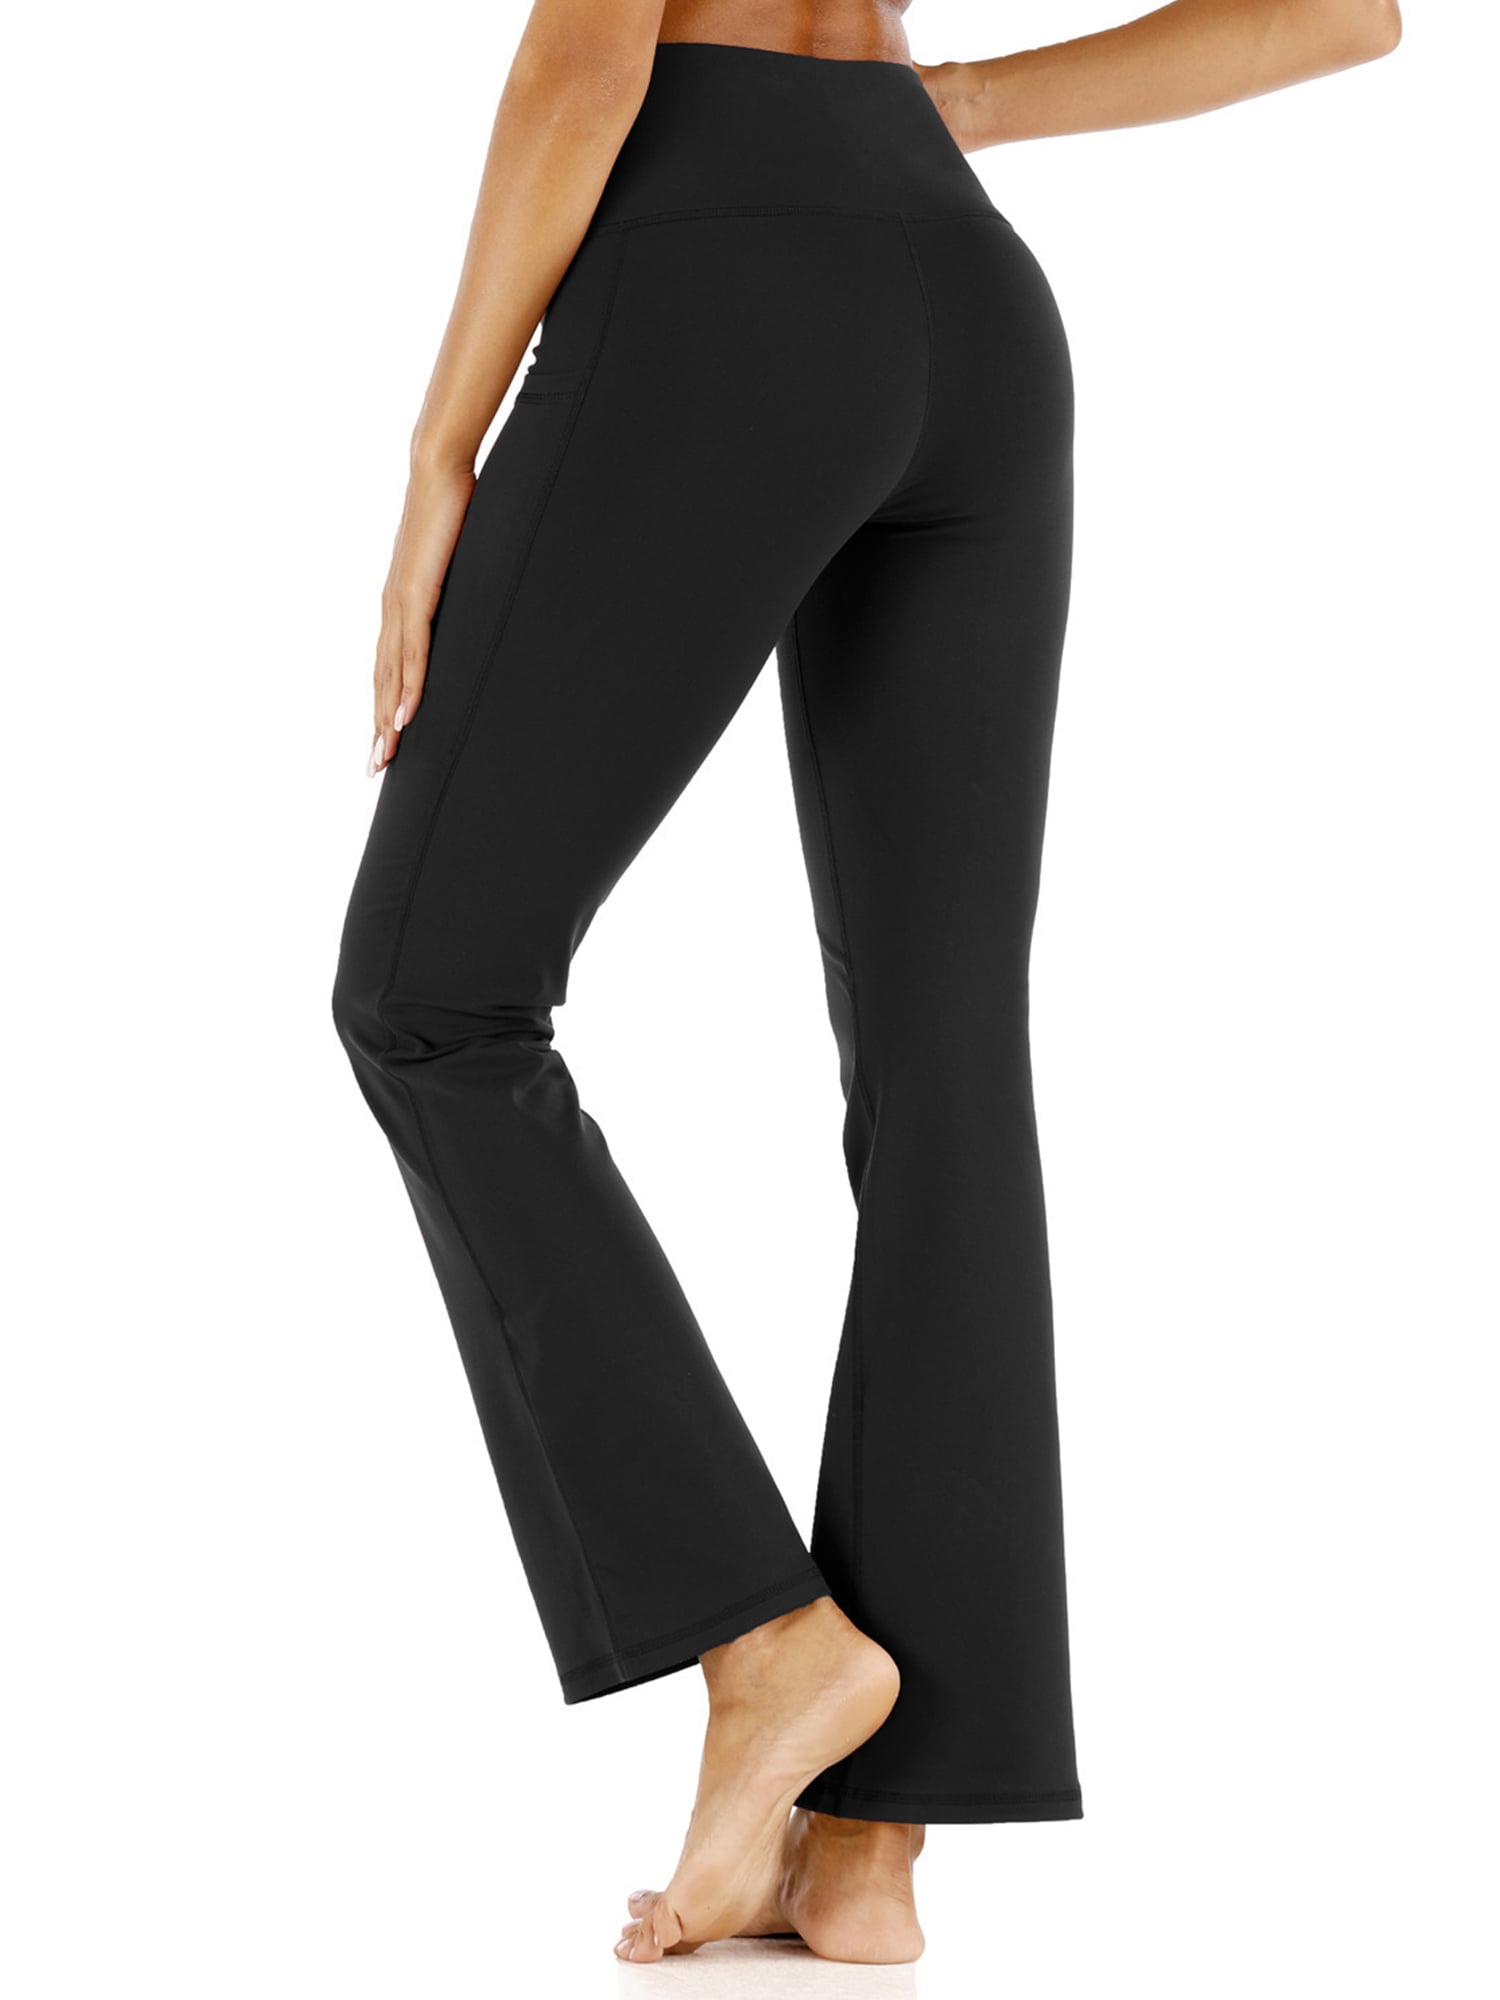 AWLE Womens Bootleg Yoga Pants High Waist Non See-Through Tummy Control Boot-Cut Flared Lounge Workout Pants